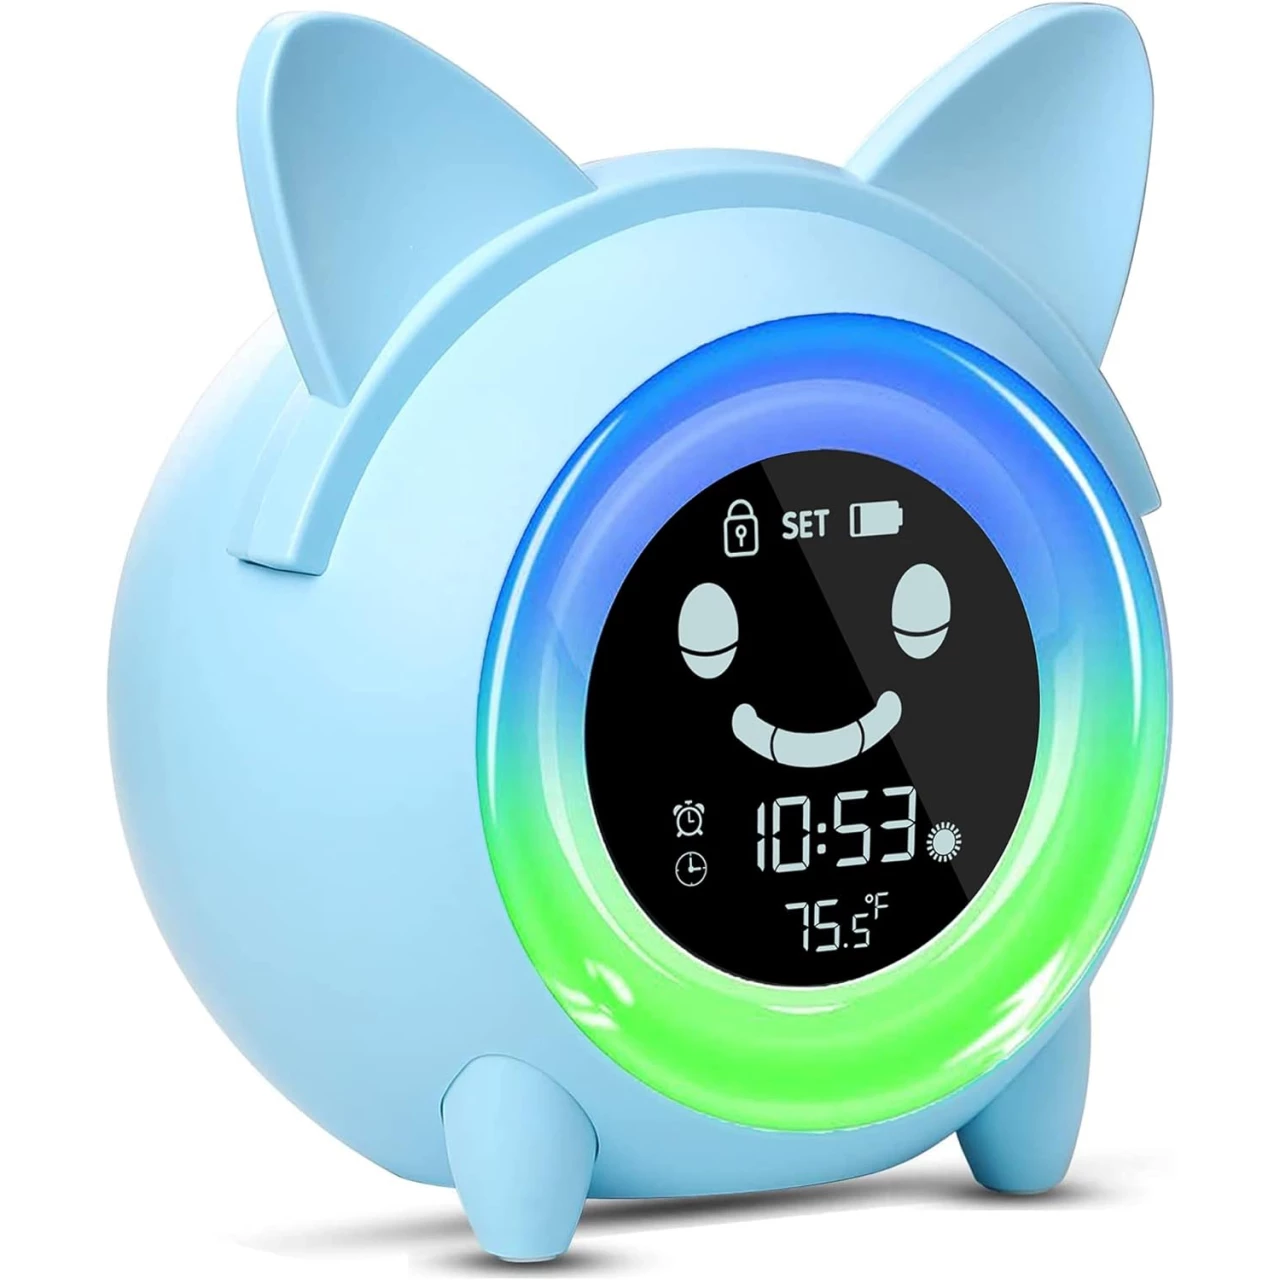 USAOSHOP Kids Alarm Clock for Kids, Toddlers Sleep Training Alarm Clock with Night Light Sound Machine Nap Timer Indoor Temperature, Digital Wake Up Clock for Boys Girls Bedroom